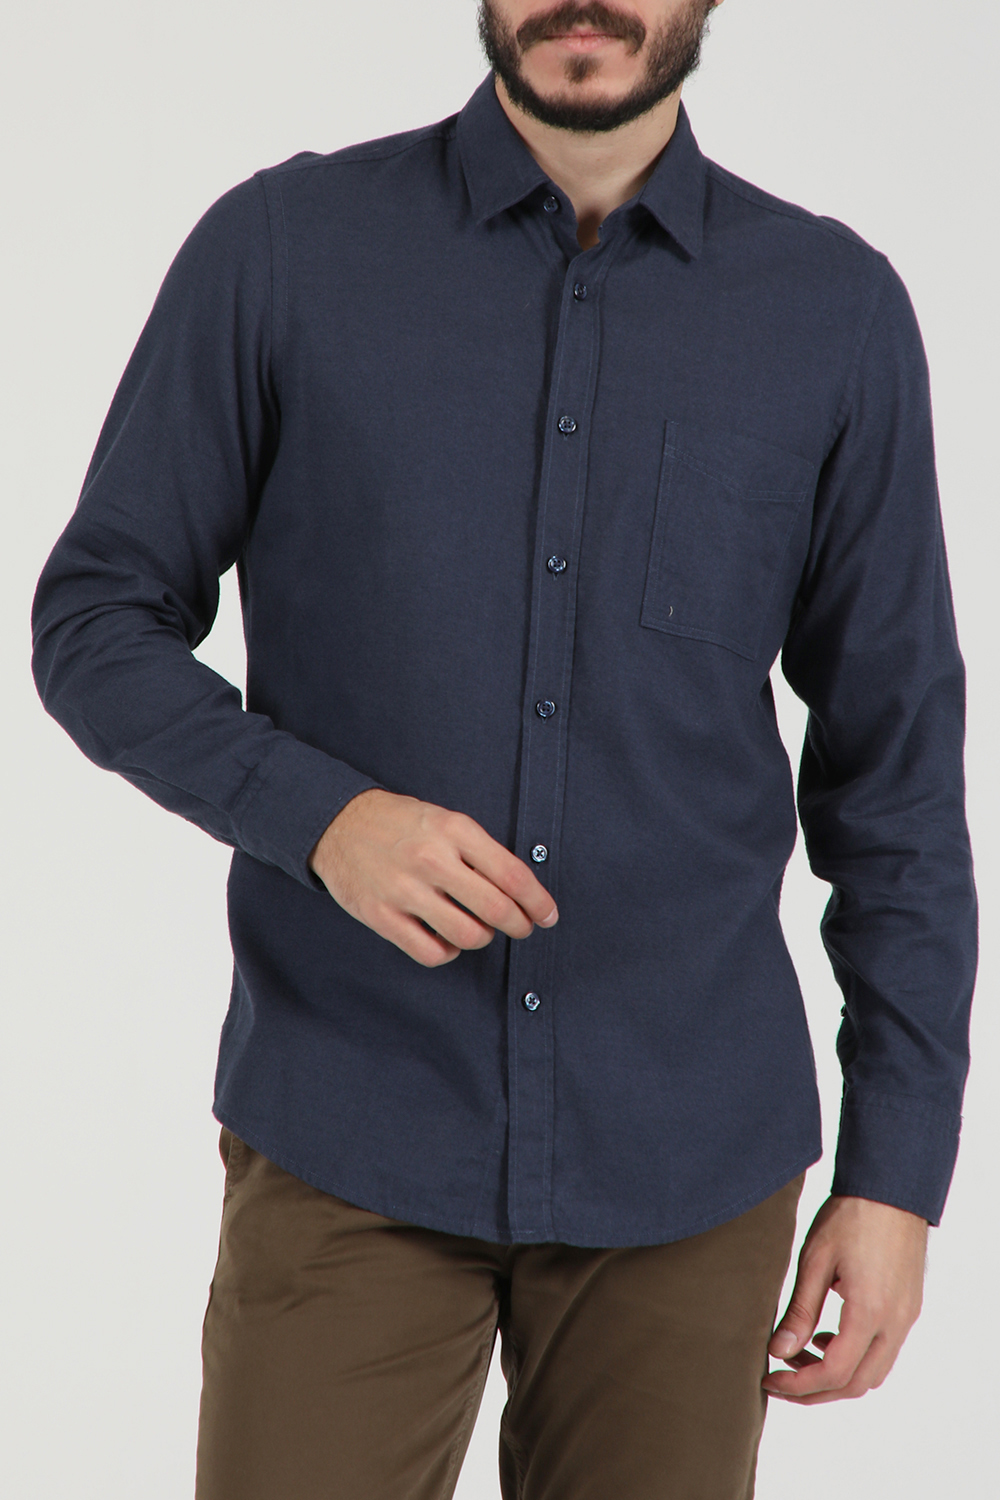 BOSS – Ανδρικό βαμβακερό πουκάμισο BOSS Relegant μπλε 1822543.0-1111